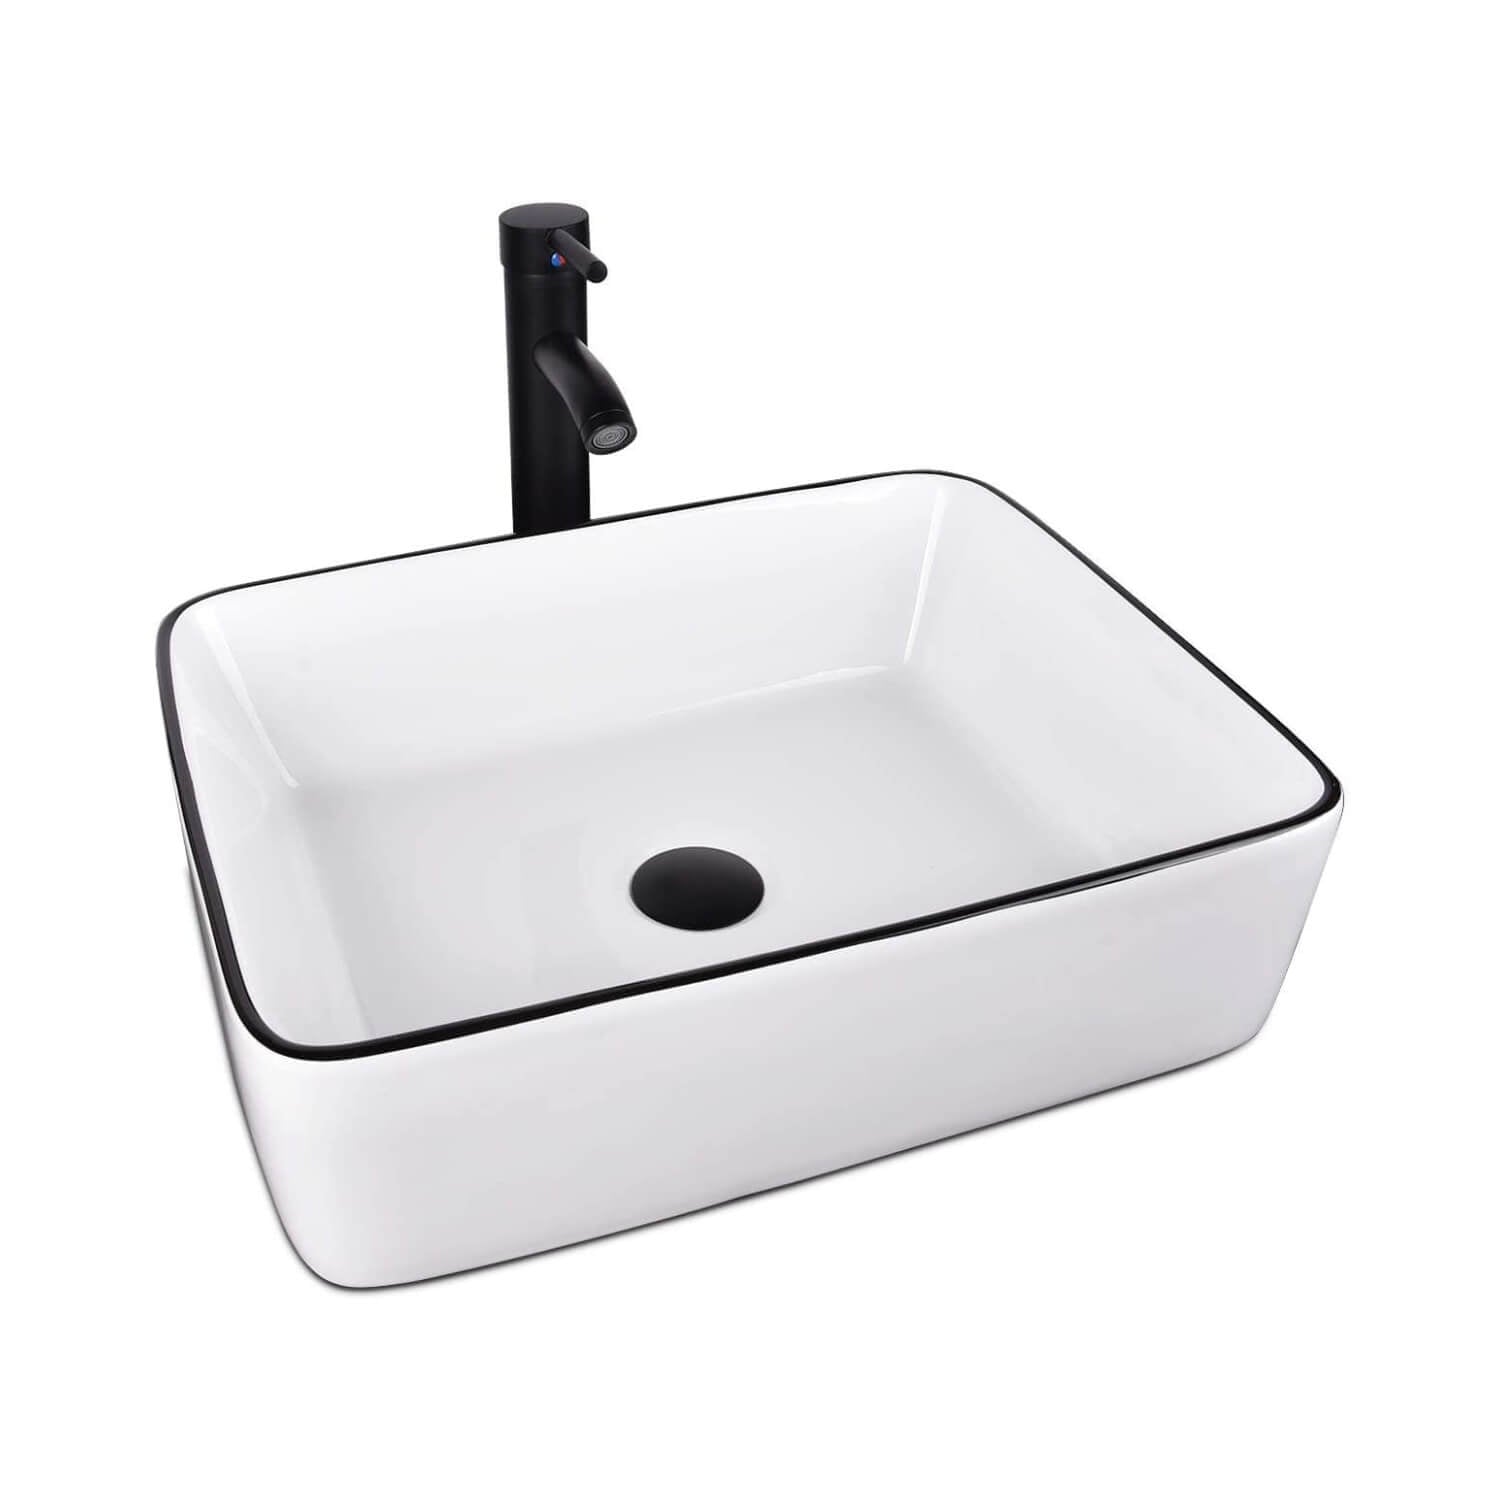 Elecwish white ceramic sink